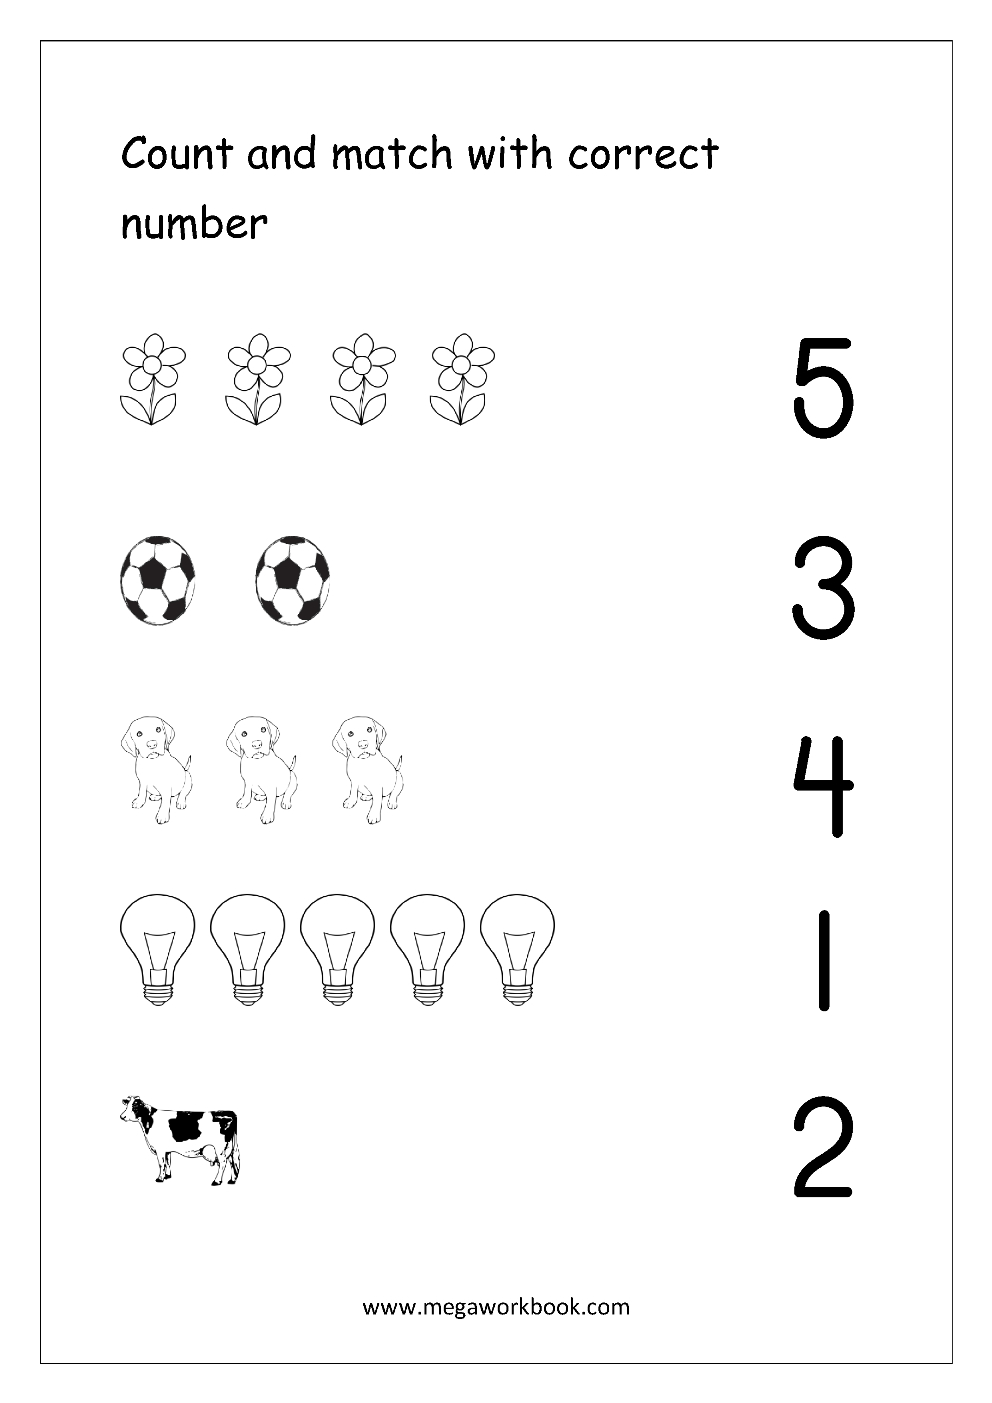 Free Printable Number Matching Worksheets For Kindergarten And | Printable Matching Worksheets For Preschoolers